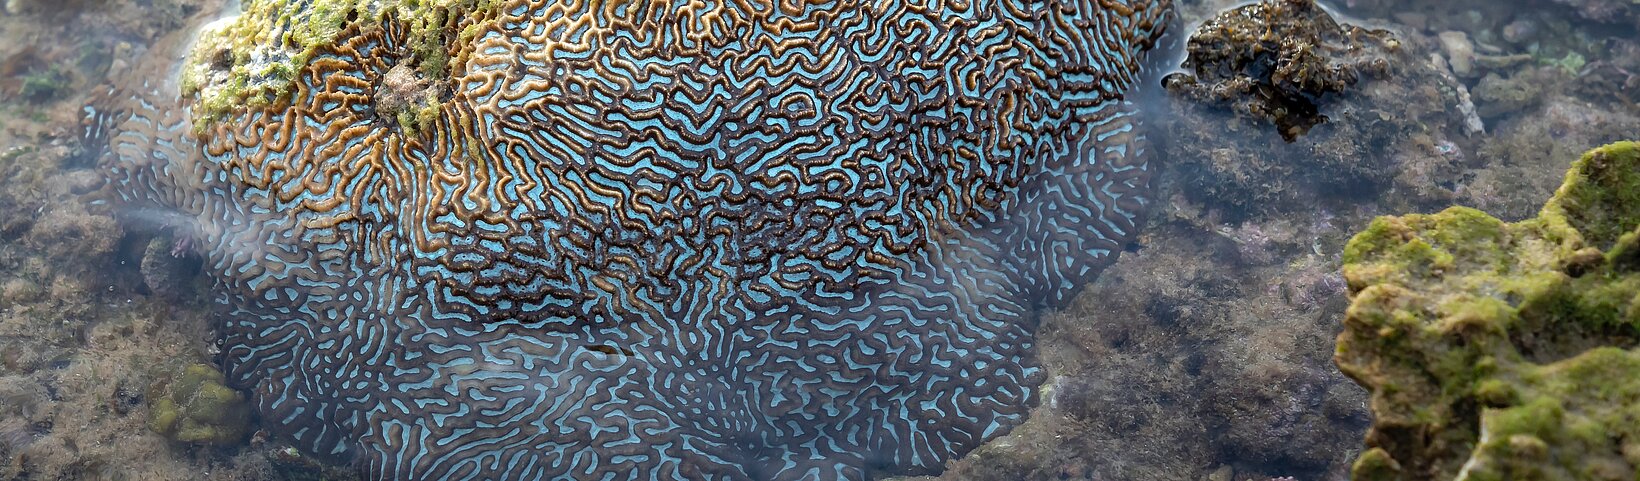 Koralle mit hirnartiger Struktur 